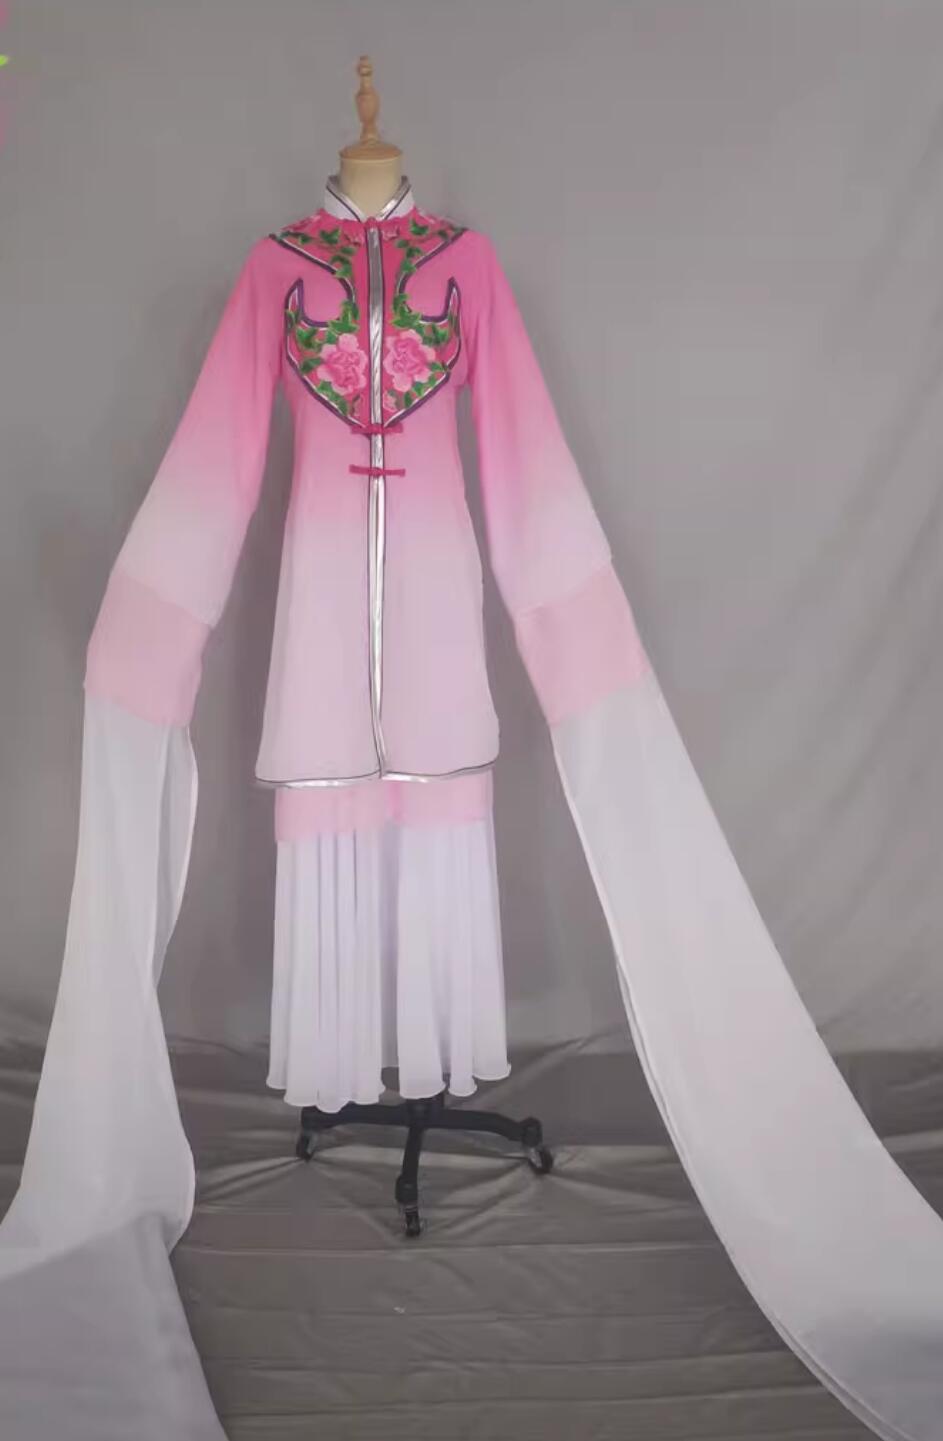 Top Peking Opera Female Water Sleeve Dress Beijing Opera Woman Costumes Pink Chinese Classical Dance Clothing